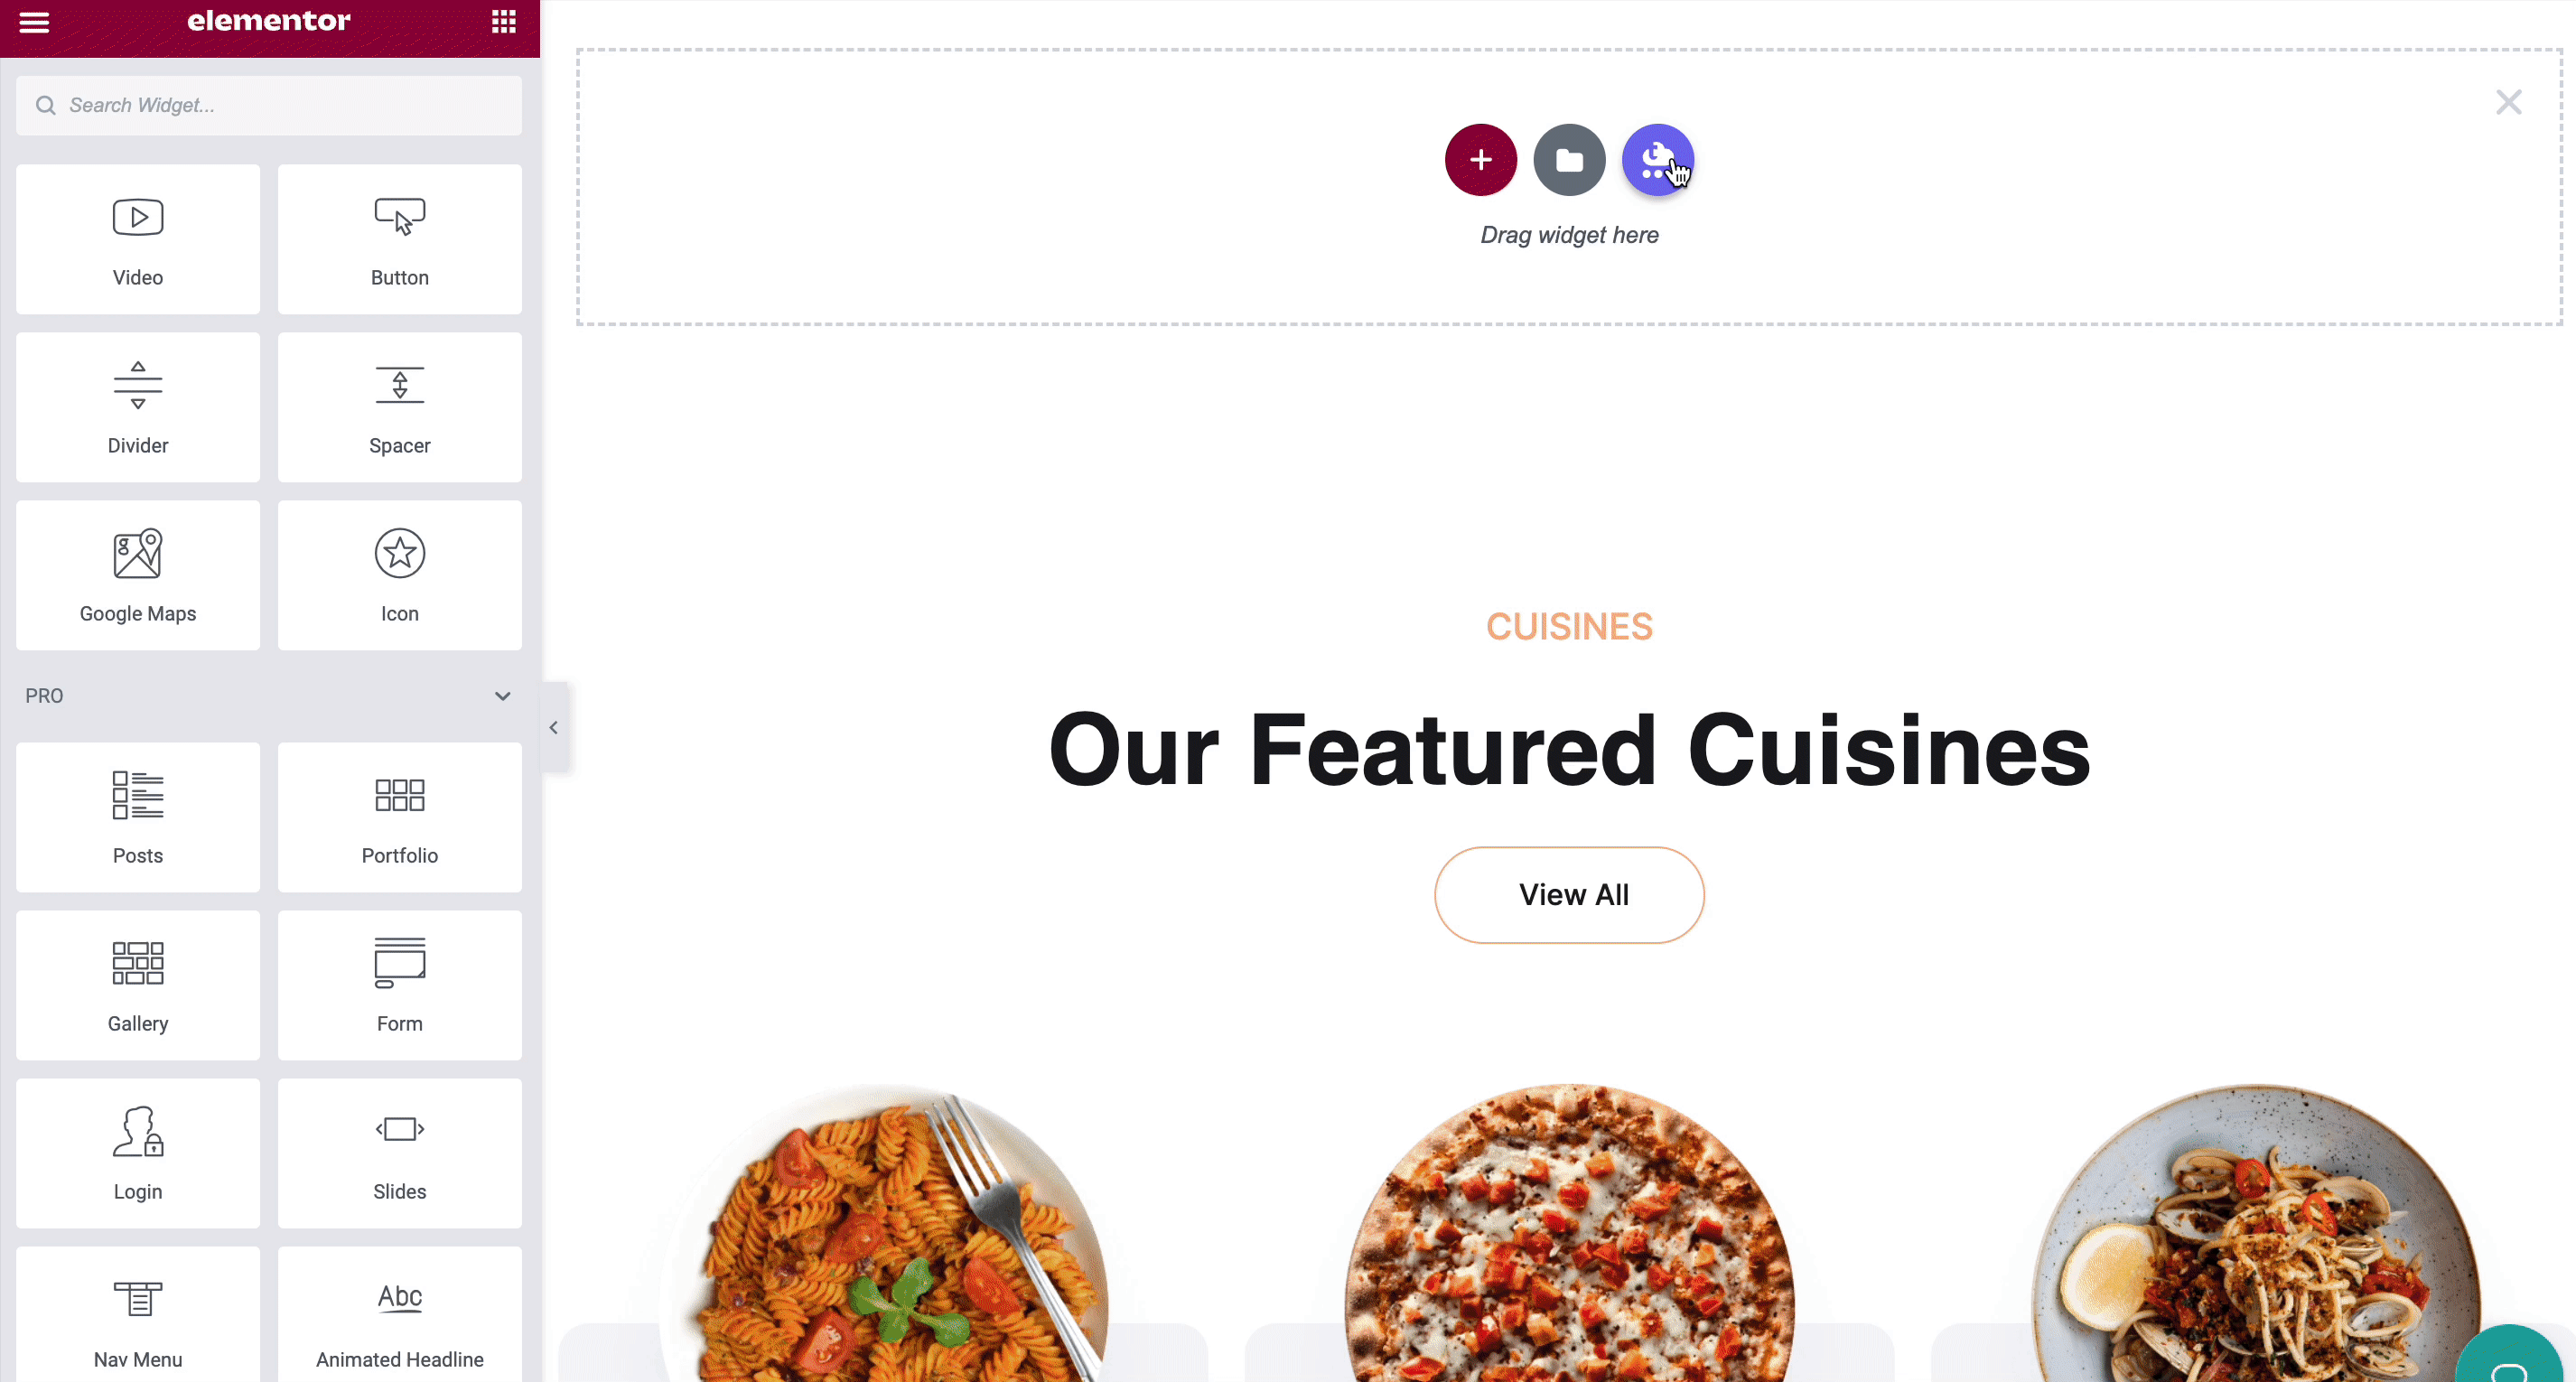 Italian Restaurant Website